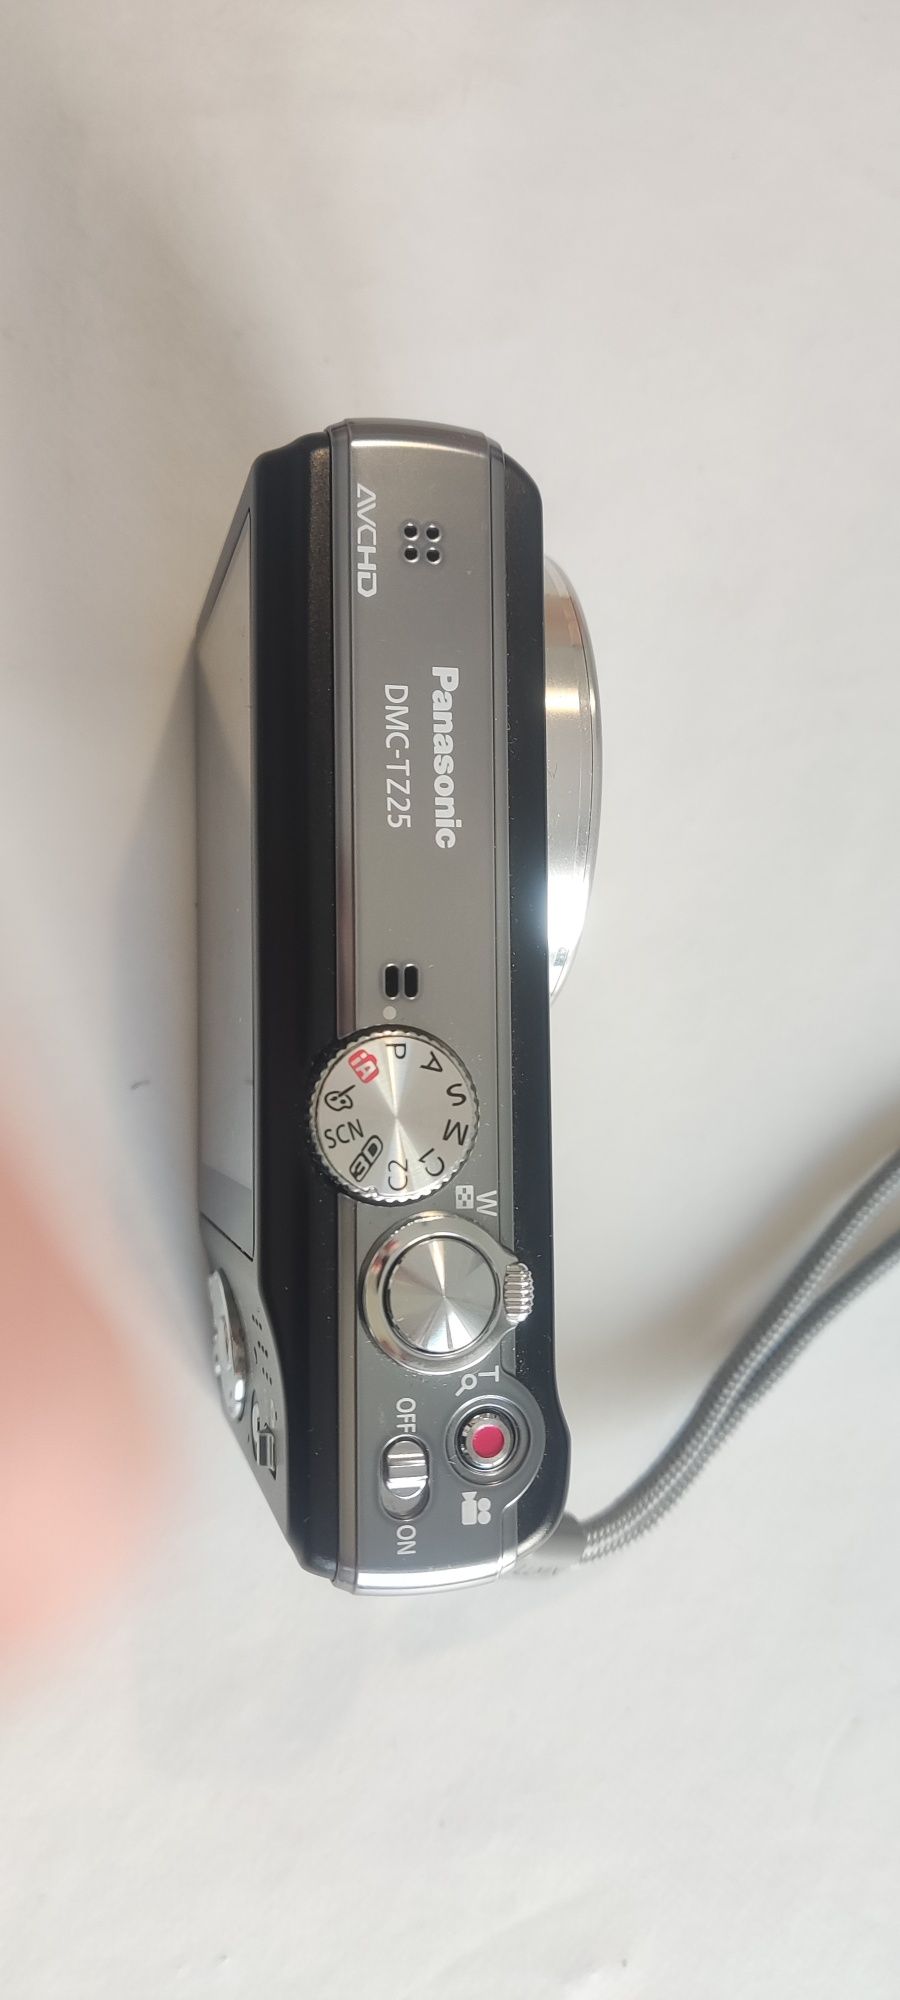 Panasonic LUMIX DMC-TZ25 preta máquina fotográfica digital